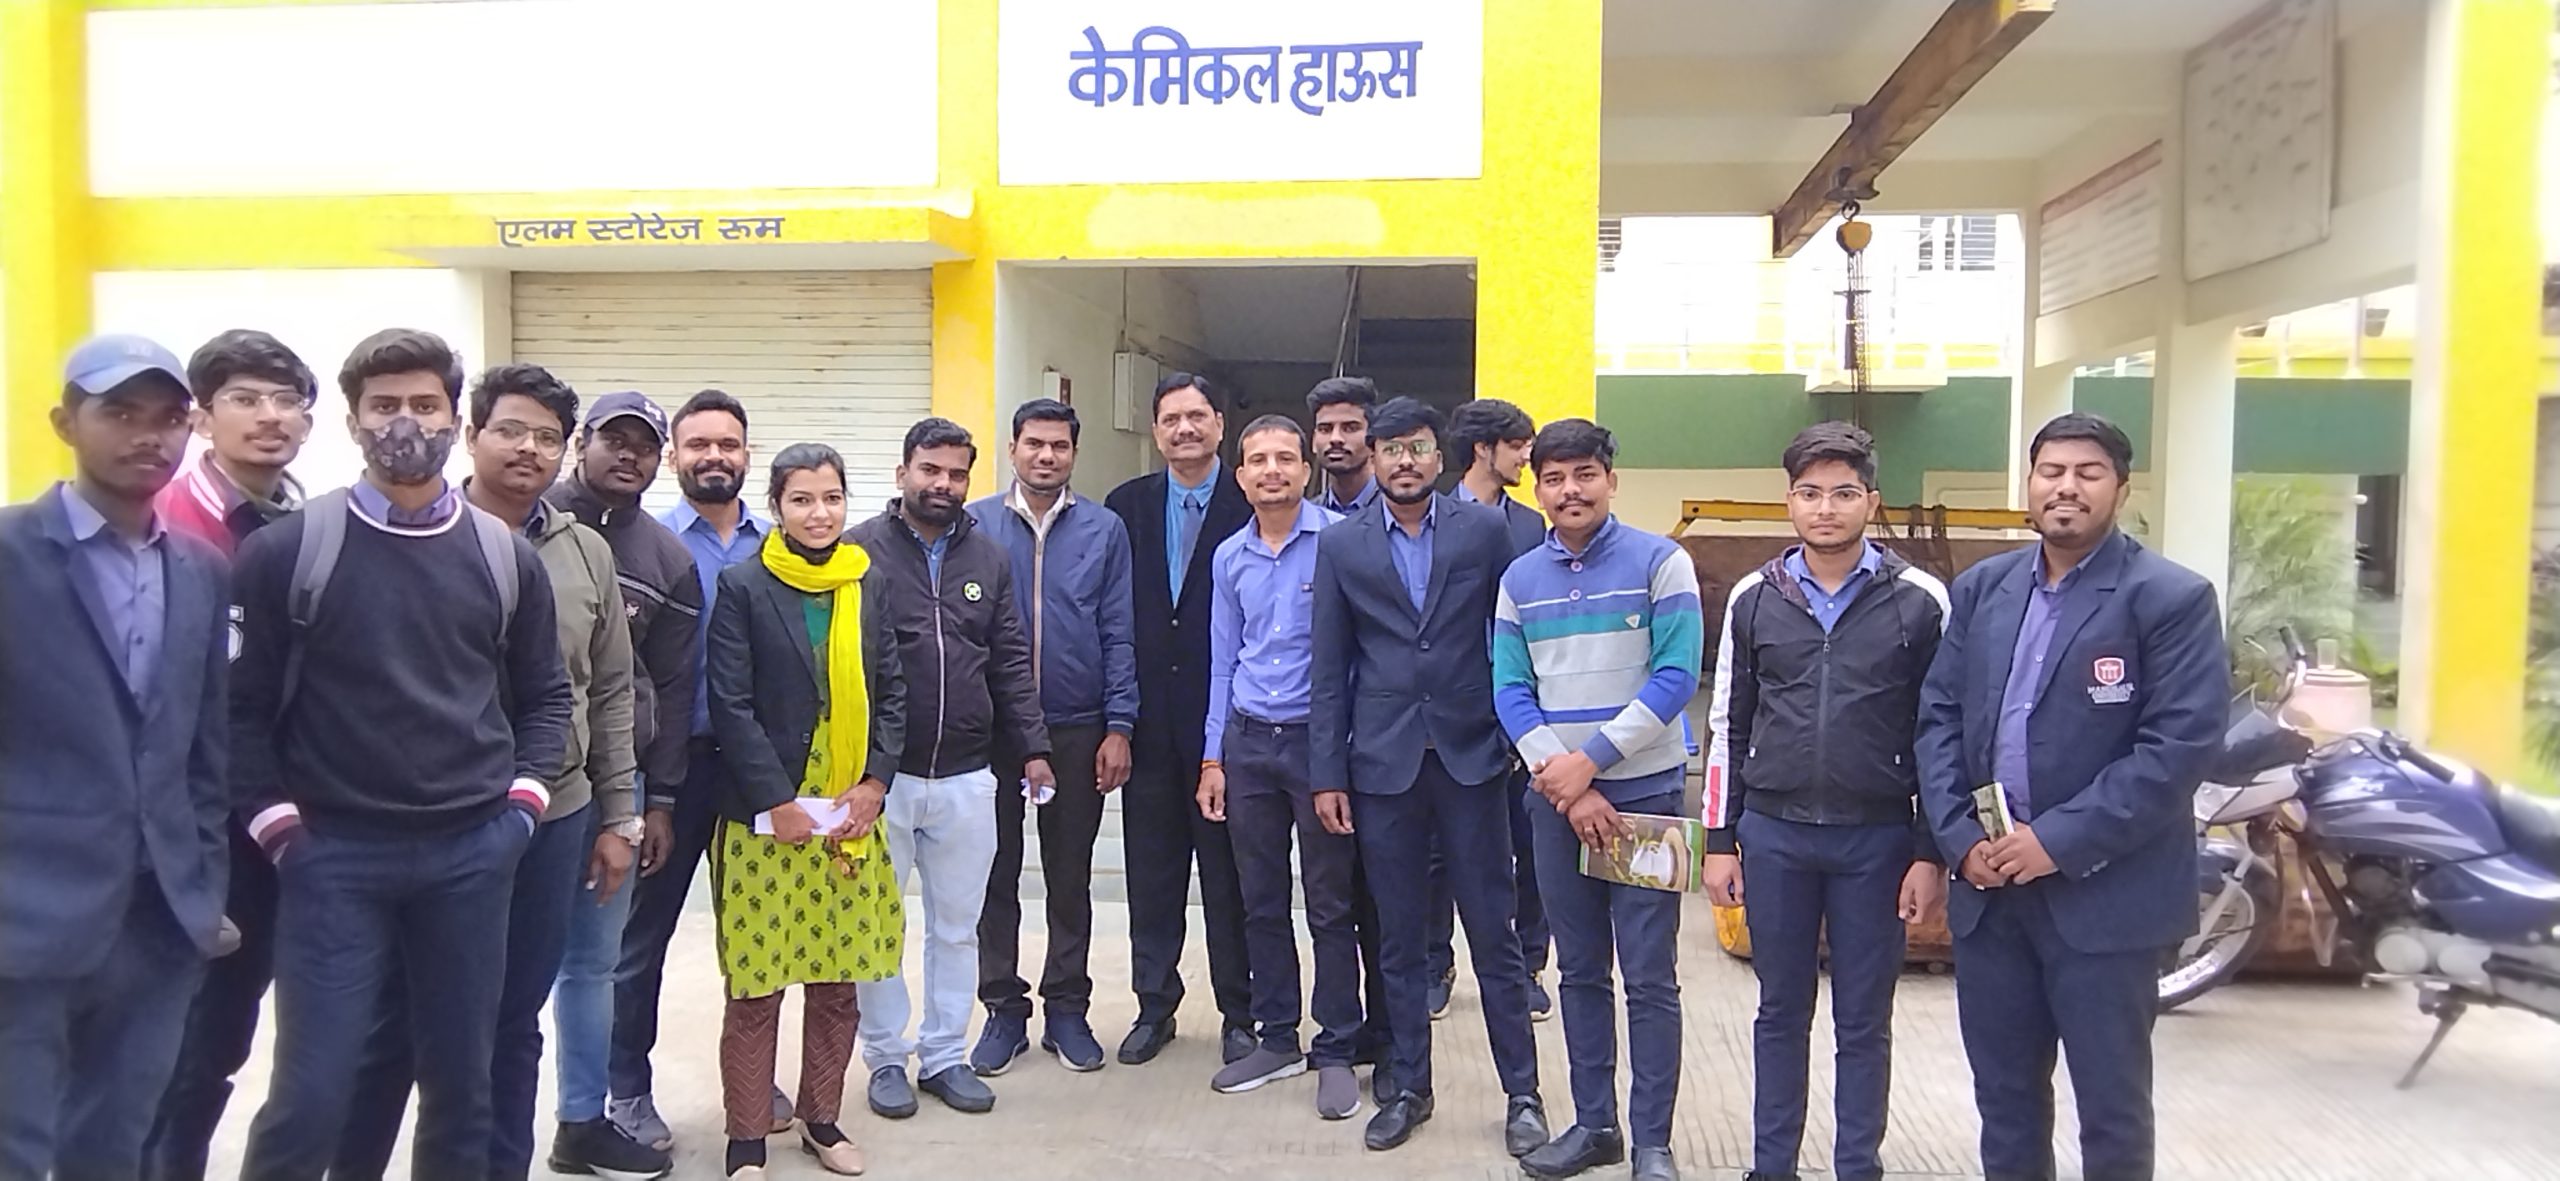 Technical visit at Water Treatment Plant 157.85 MLD capacity Ramghat”Mandsaur